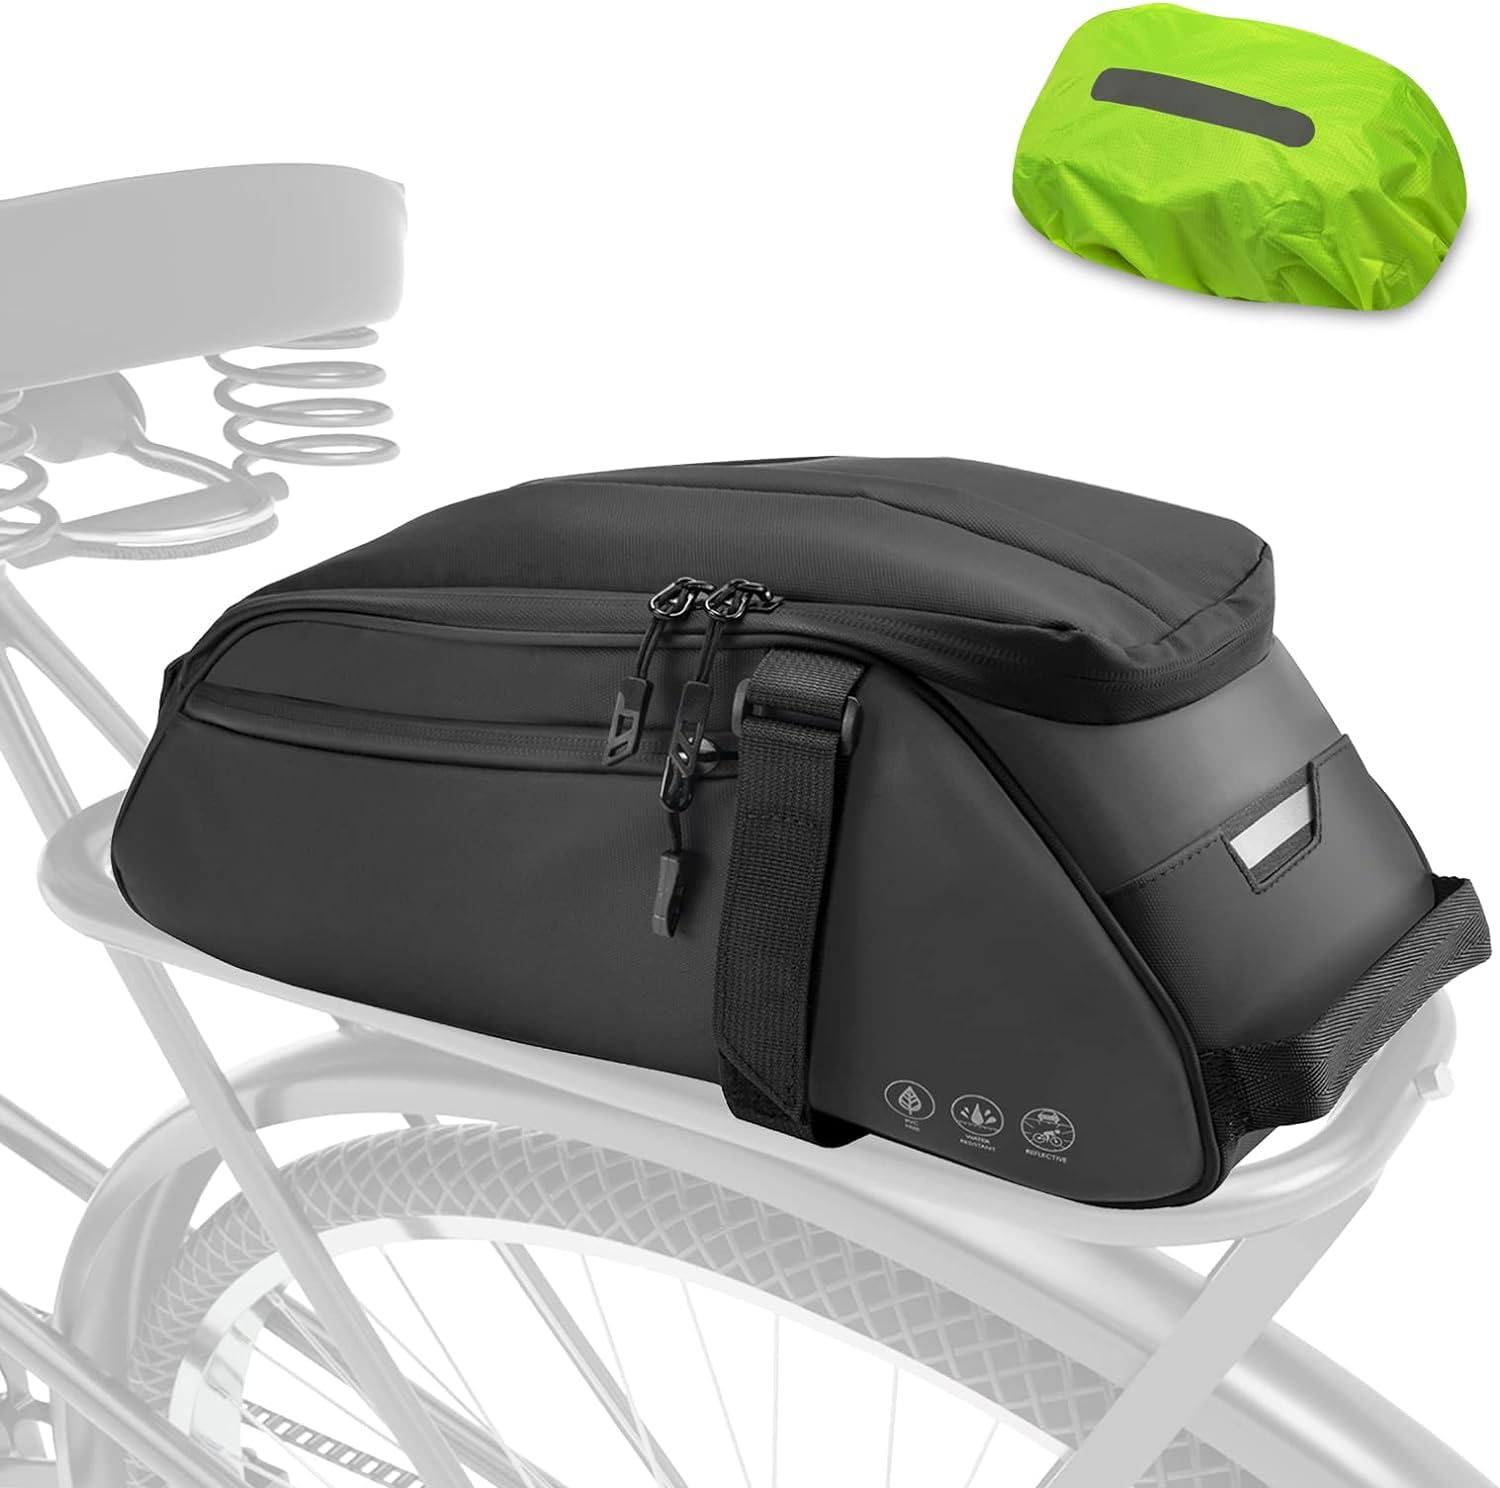 JOLY FANG Fahrrad Gepäckträgertasche, 8L Multifunktionale Fahrradtaschen für gepäckträger, Wasserdicht & Reflektierend fahrradtasche gepäckträger Rucksack Handtasche mit Regenschutz von JOLY FANG